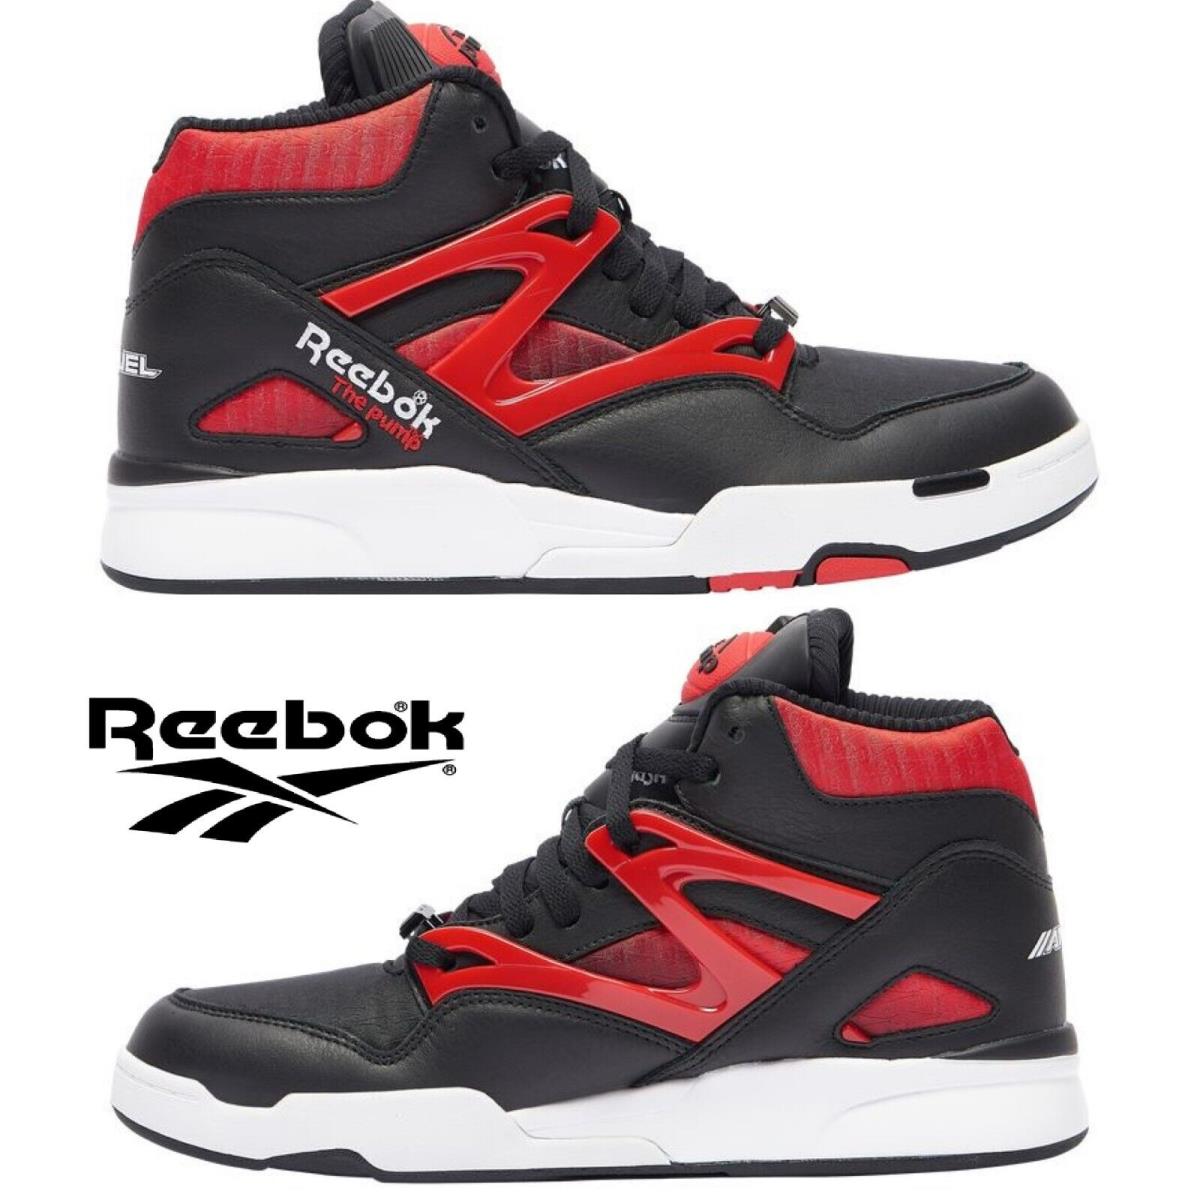 Reebok Pump Omni Zone 2 Basketball Shoes Men`s Sneakers Running Casual Sport - Black, Manufacturer: Black/Red